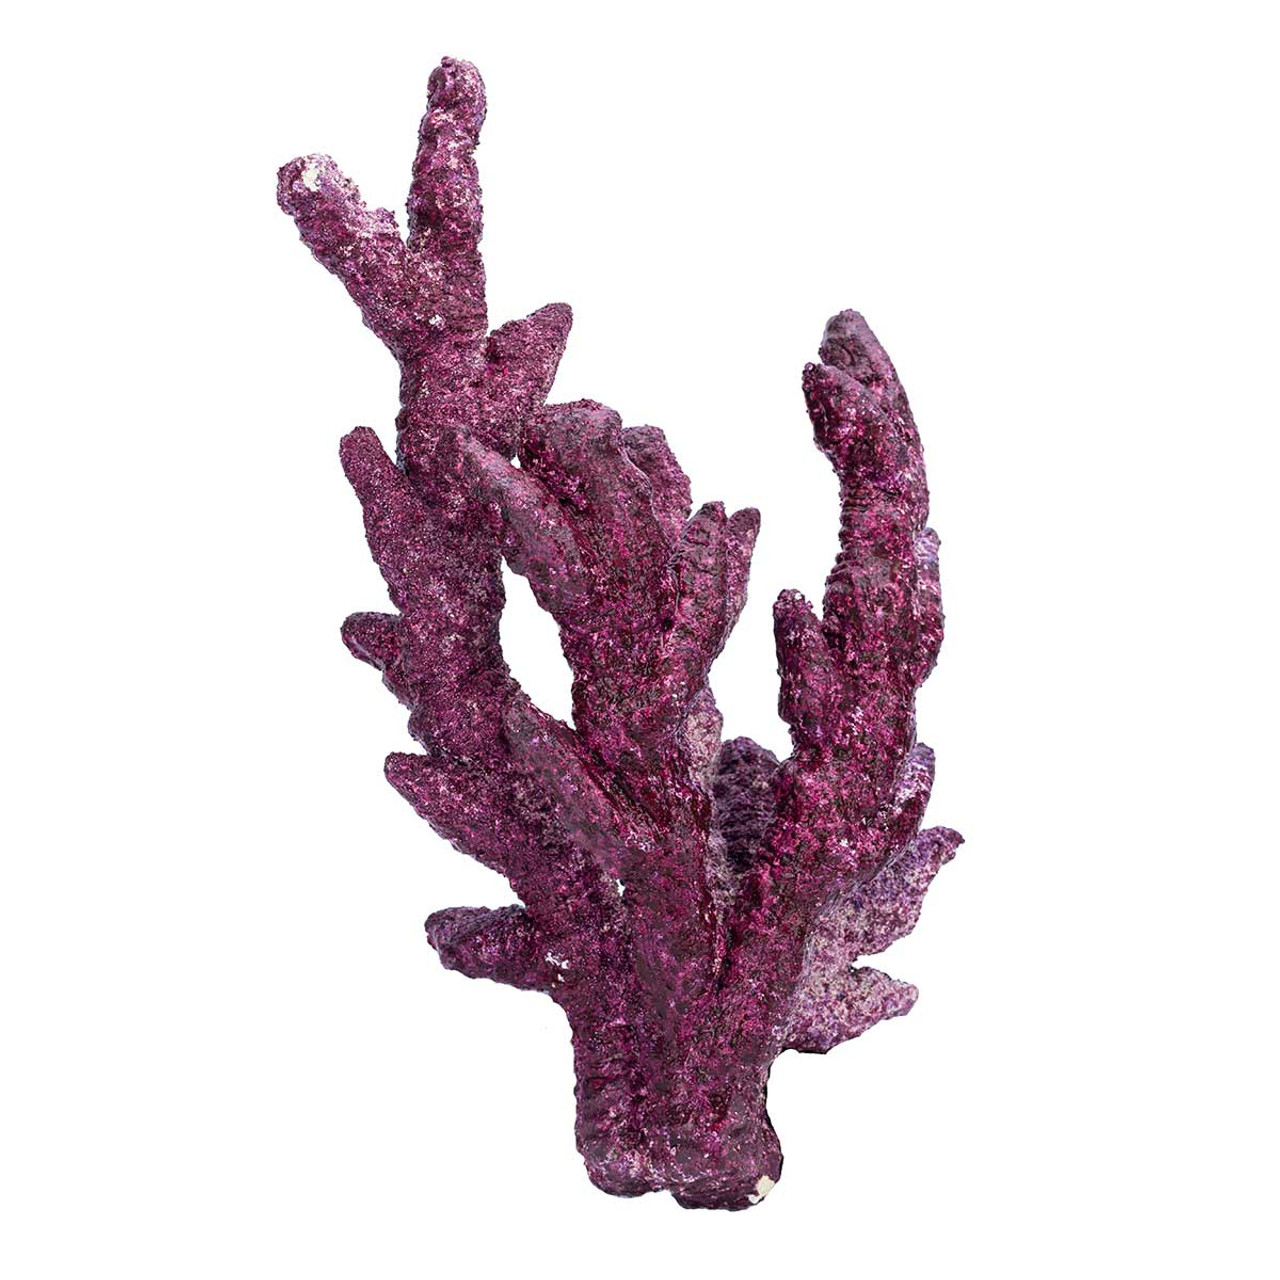 Real Reef FANCY Branch Rock (15 lb) Box - Real Reef - SaltwaterAquarium.com